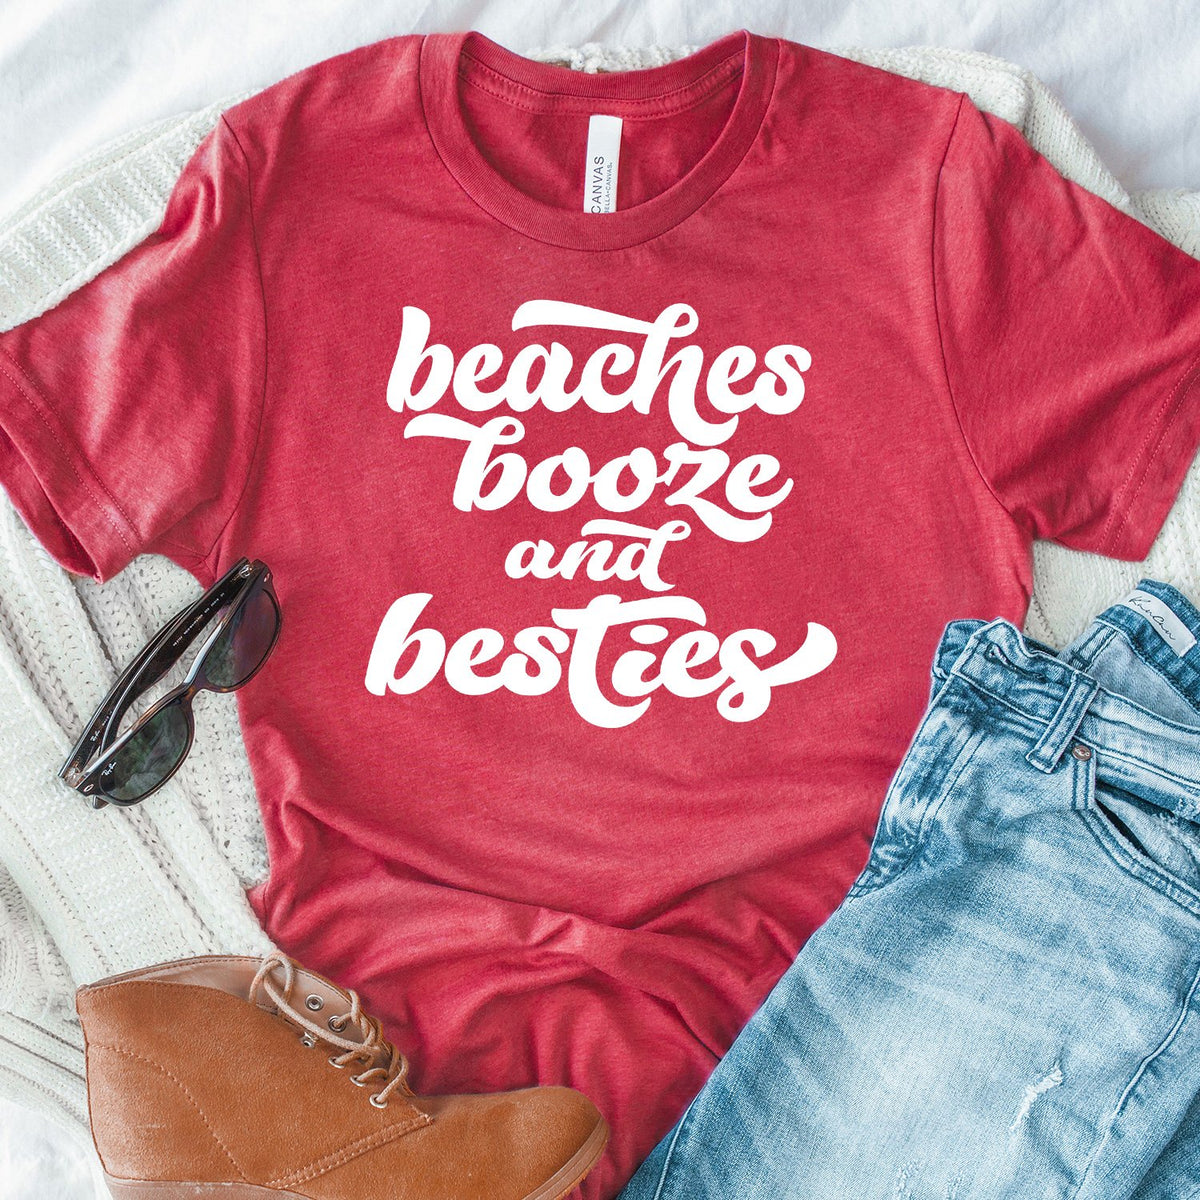 Beaches Booze and Besties - Short Sleeve Tee Shirt